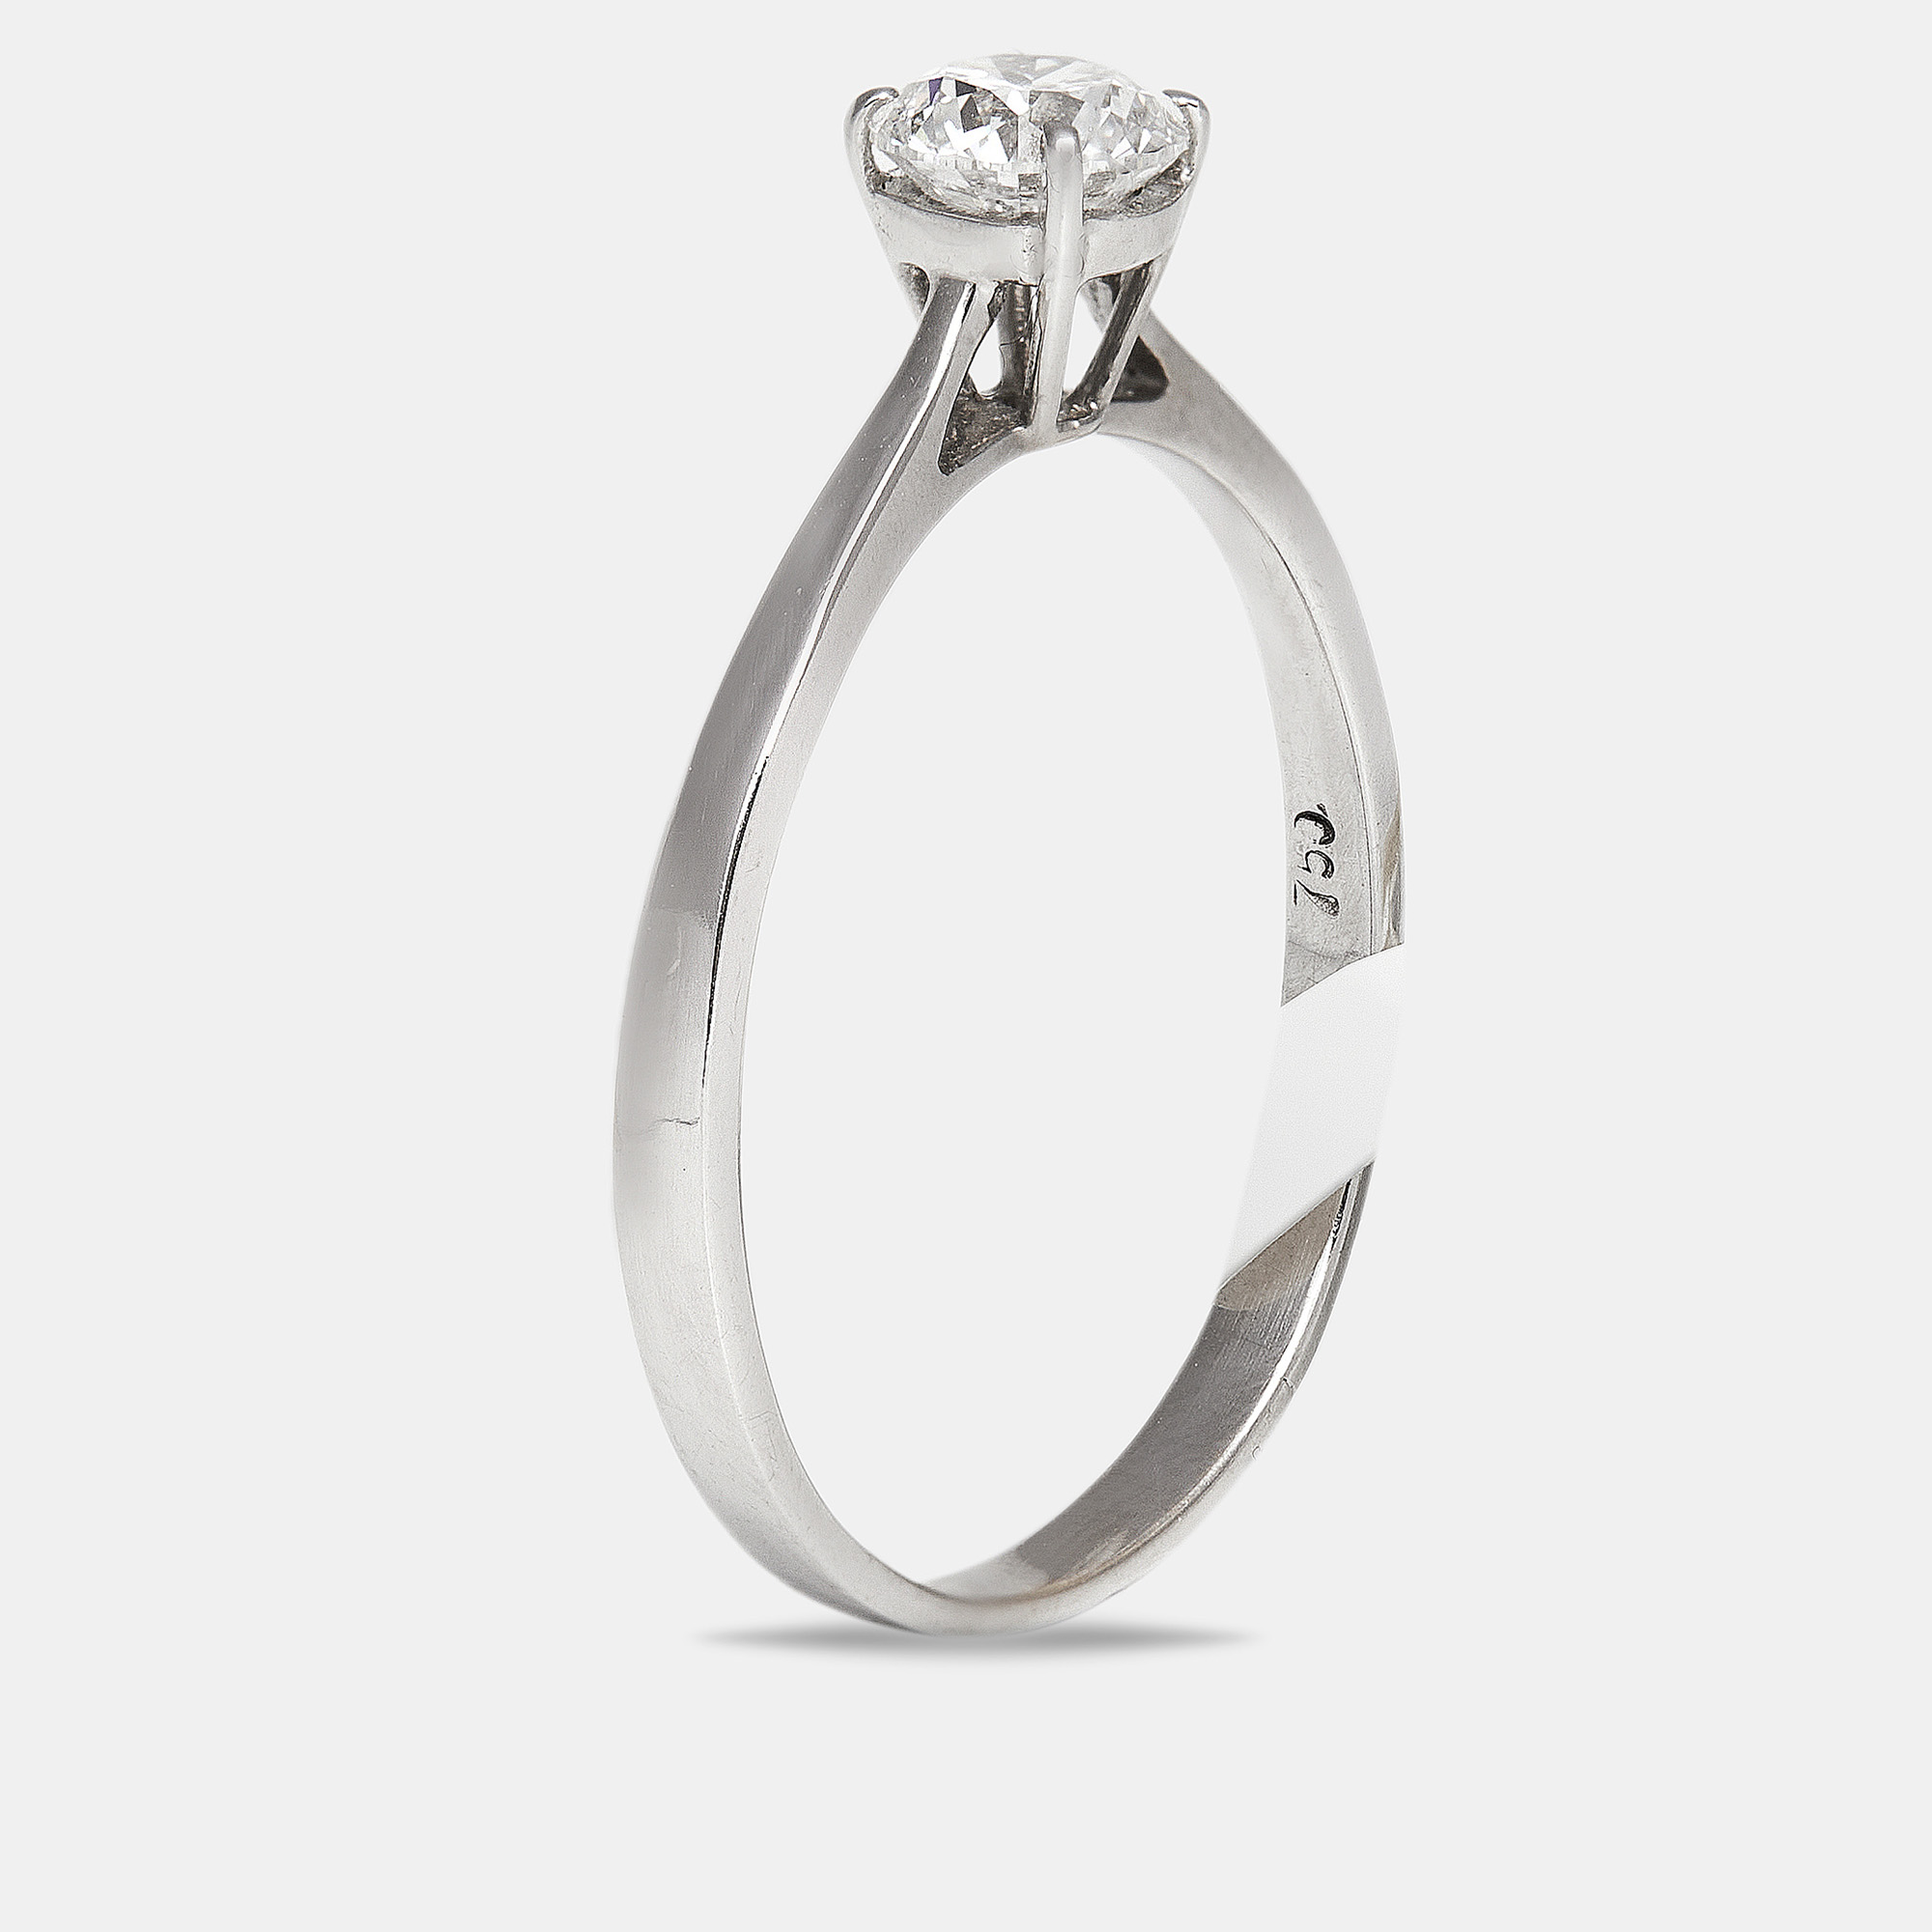 The diamond edit solitare diamond 0.62 ct 18k white gold wedding ring size 61